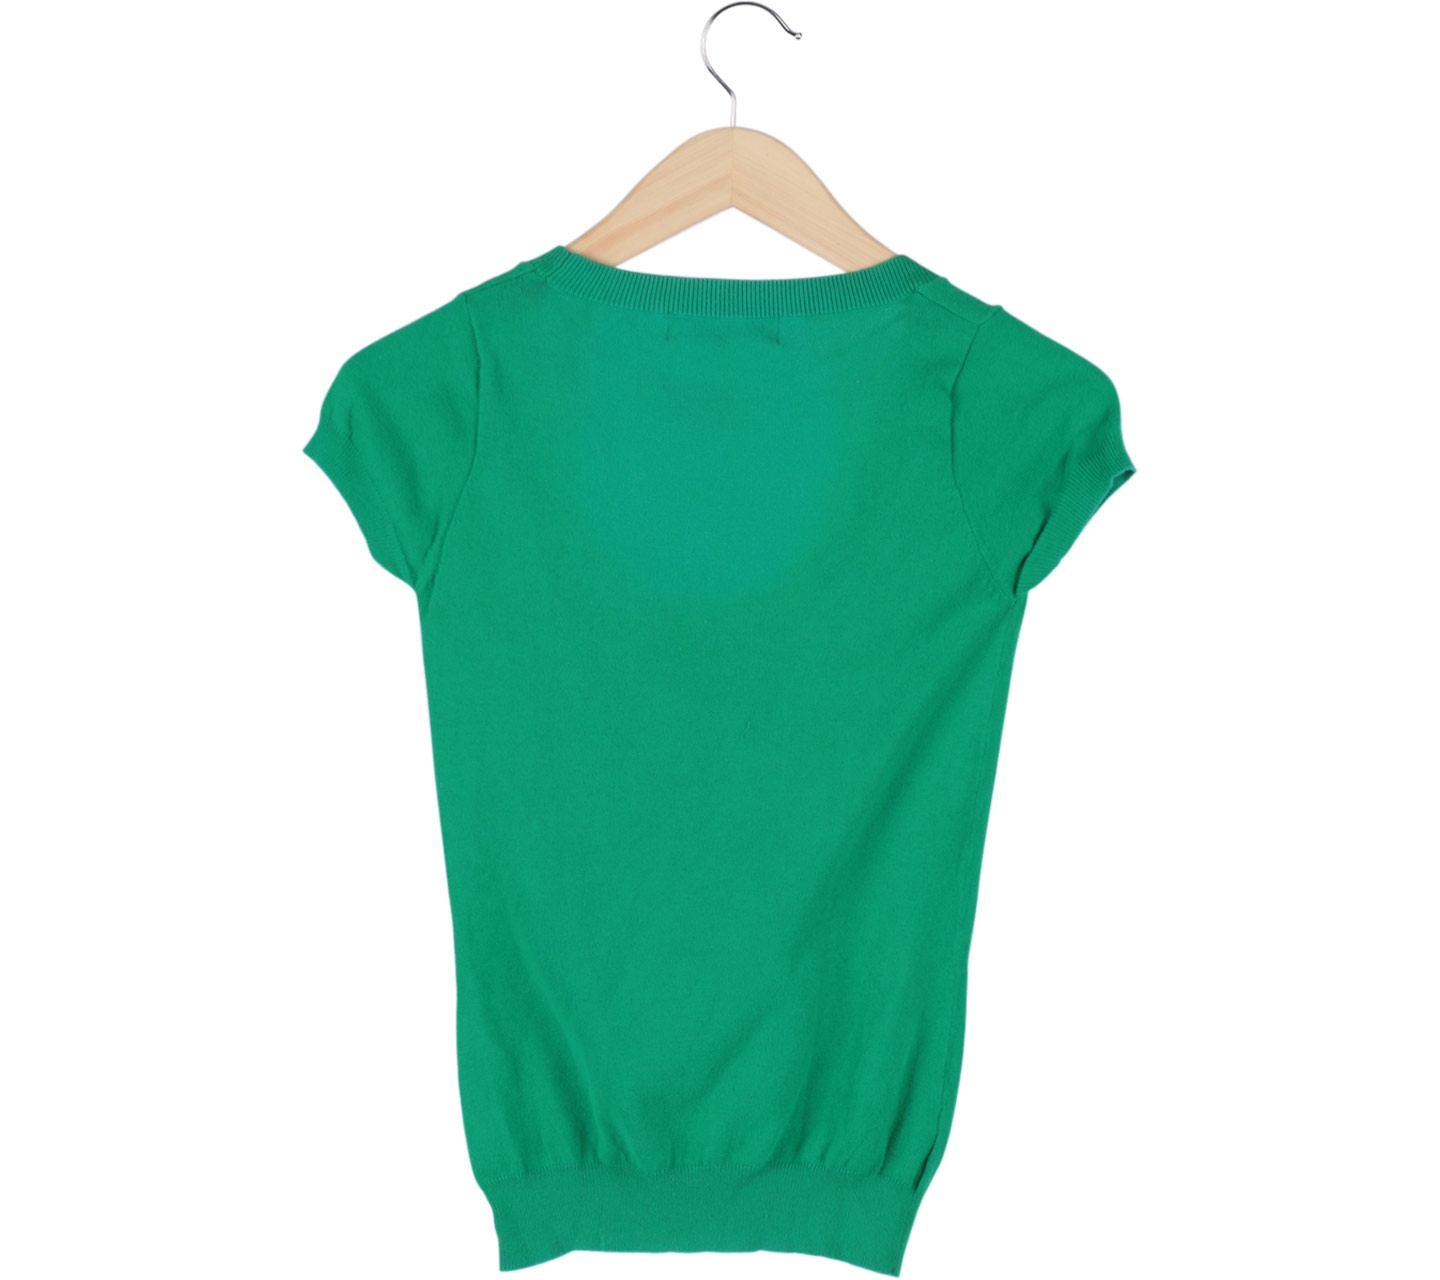 Zara Green Knitted Blouse